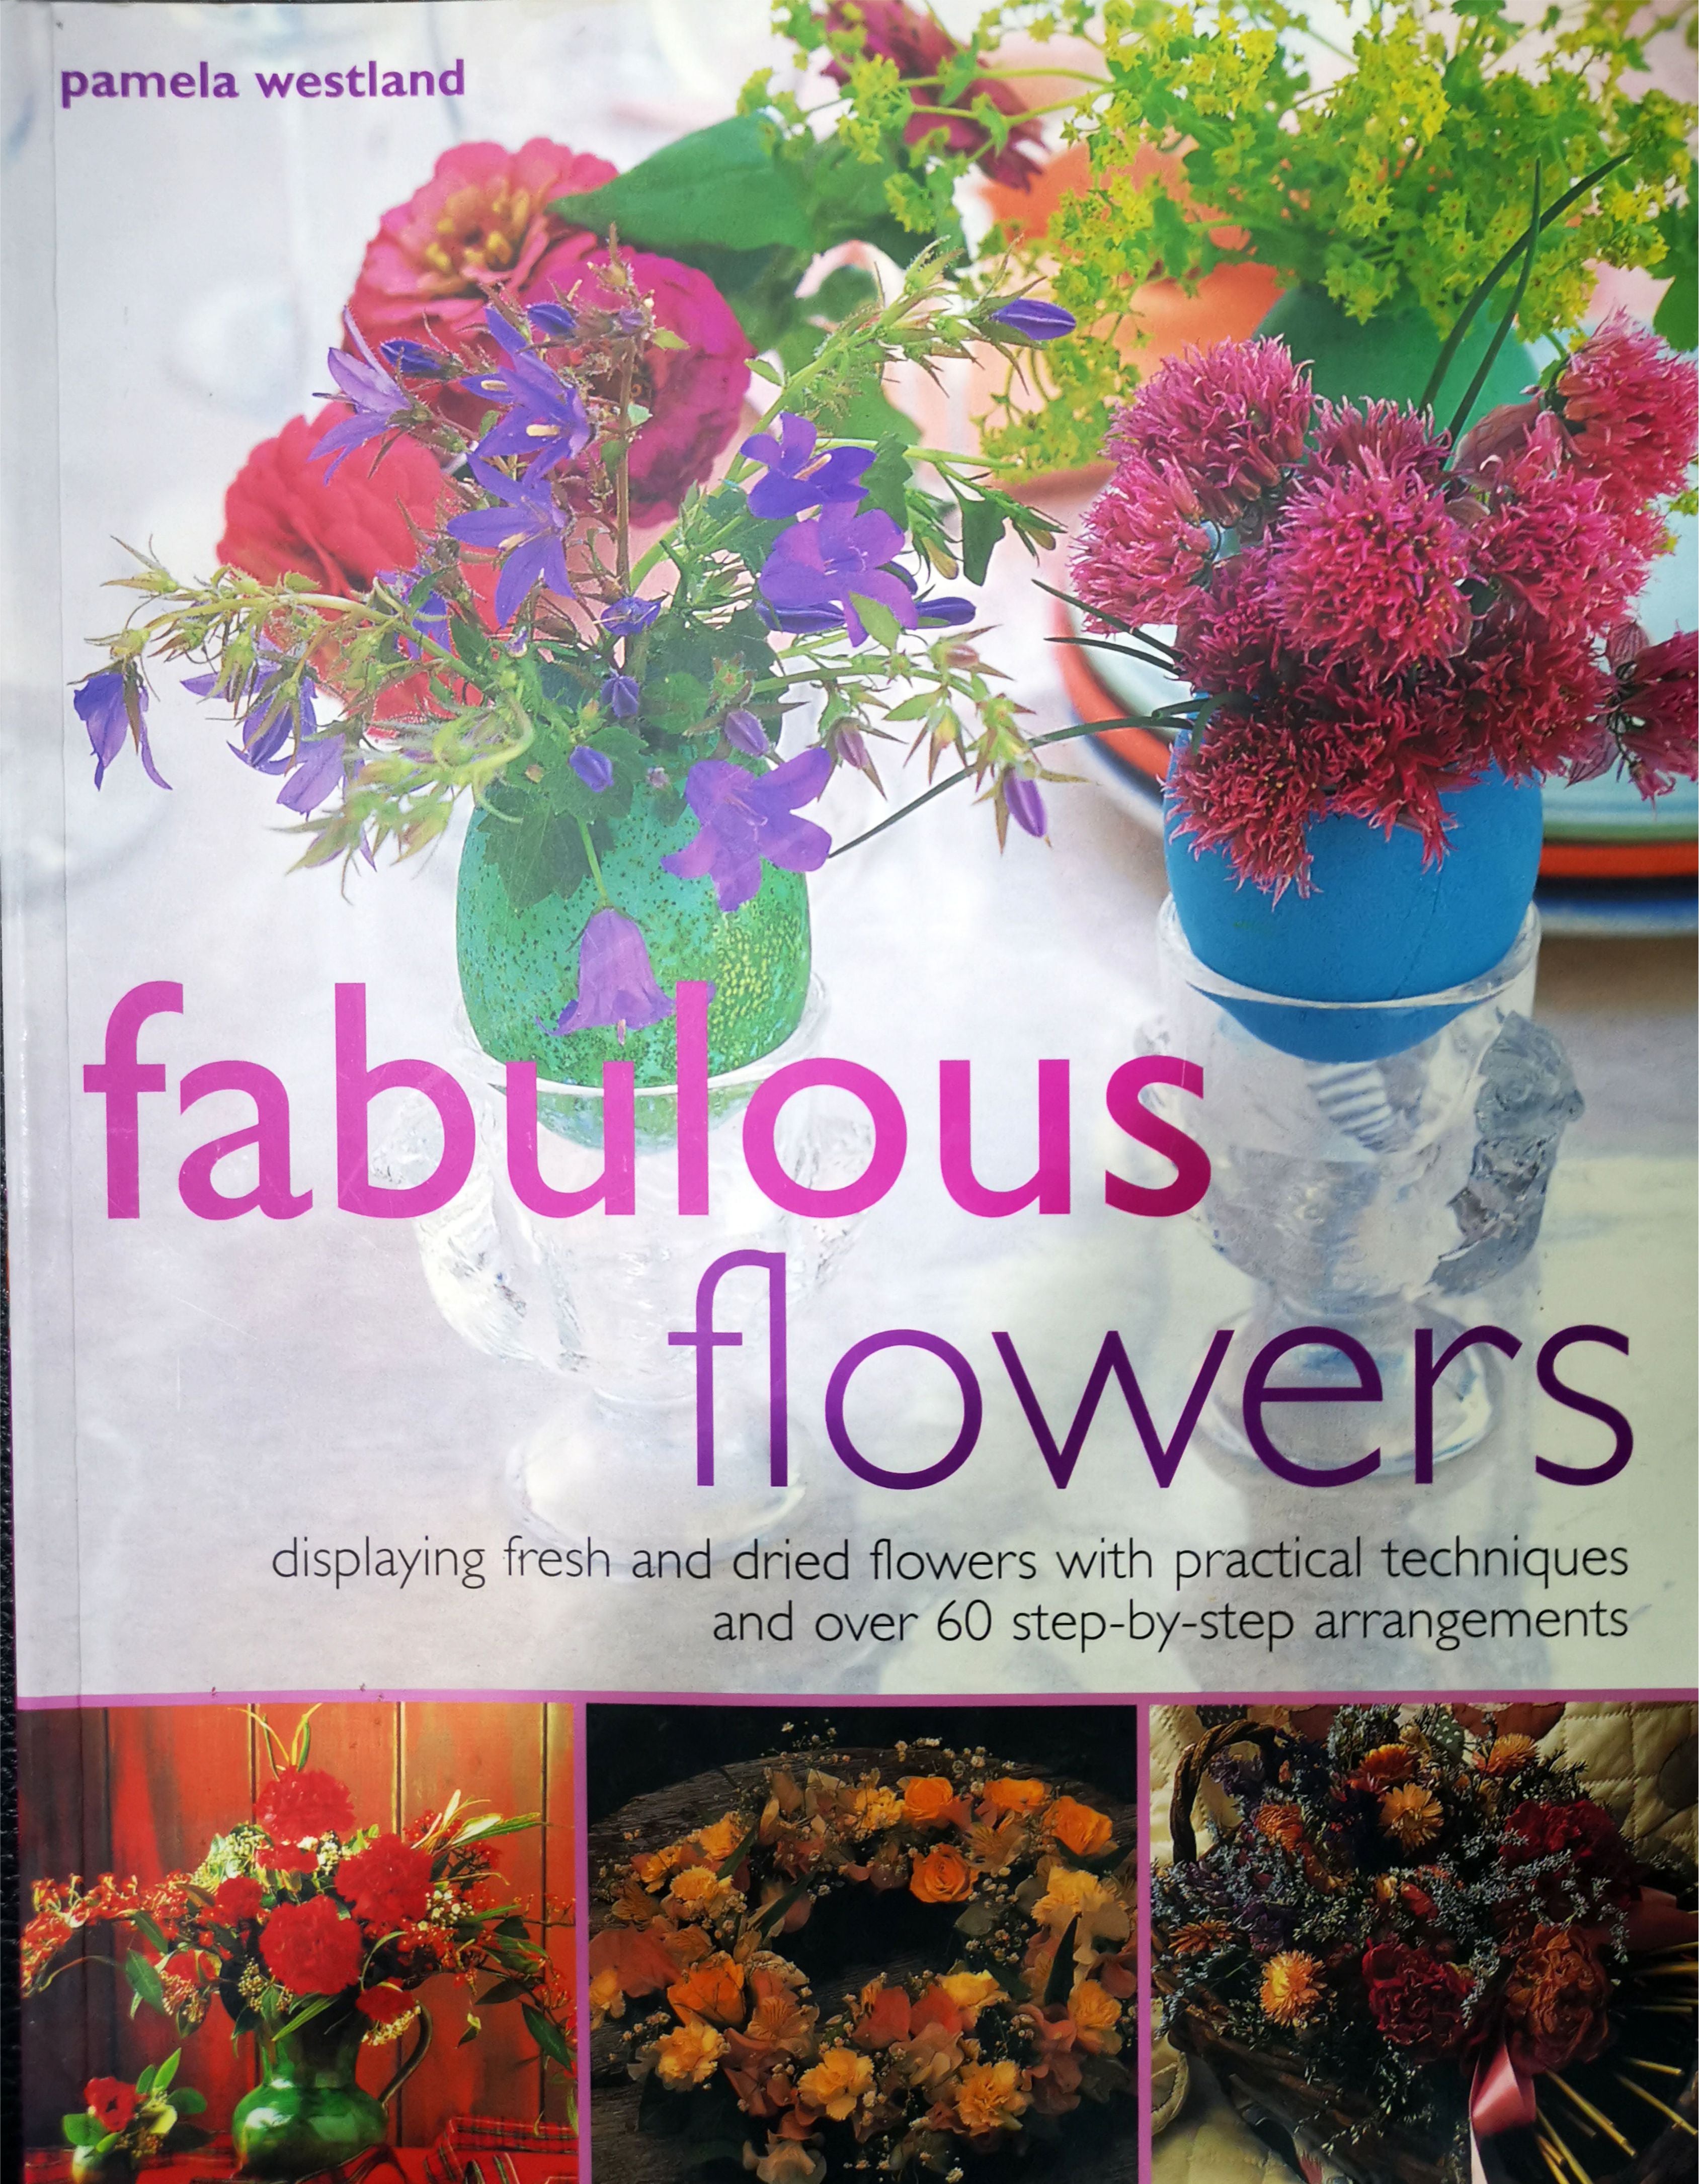 Fabulous Flowers : Pamela estland